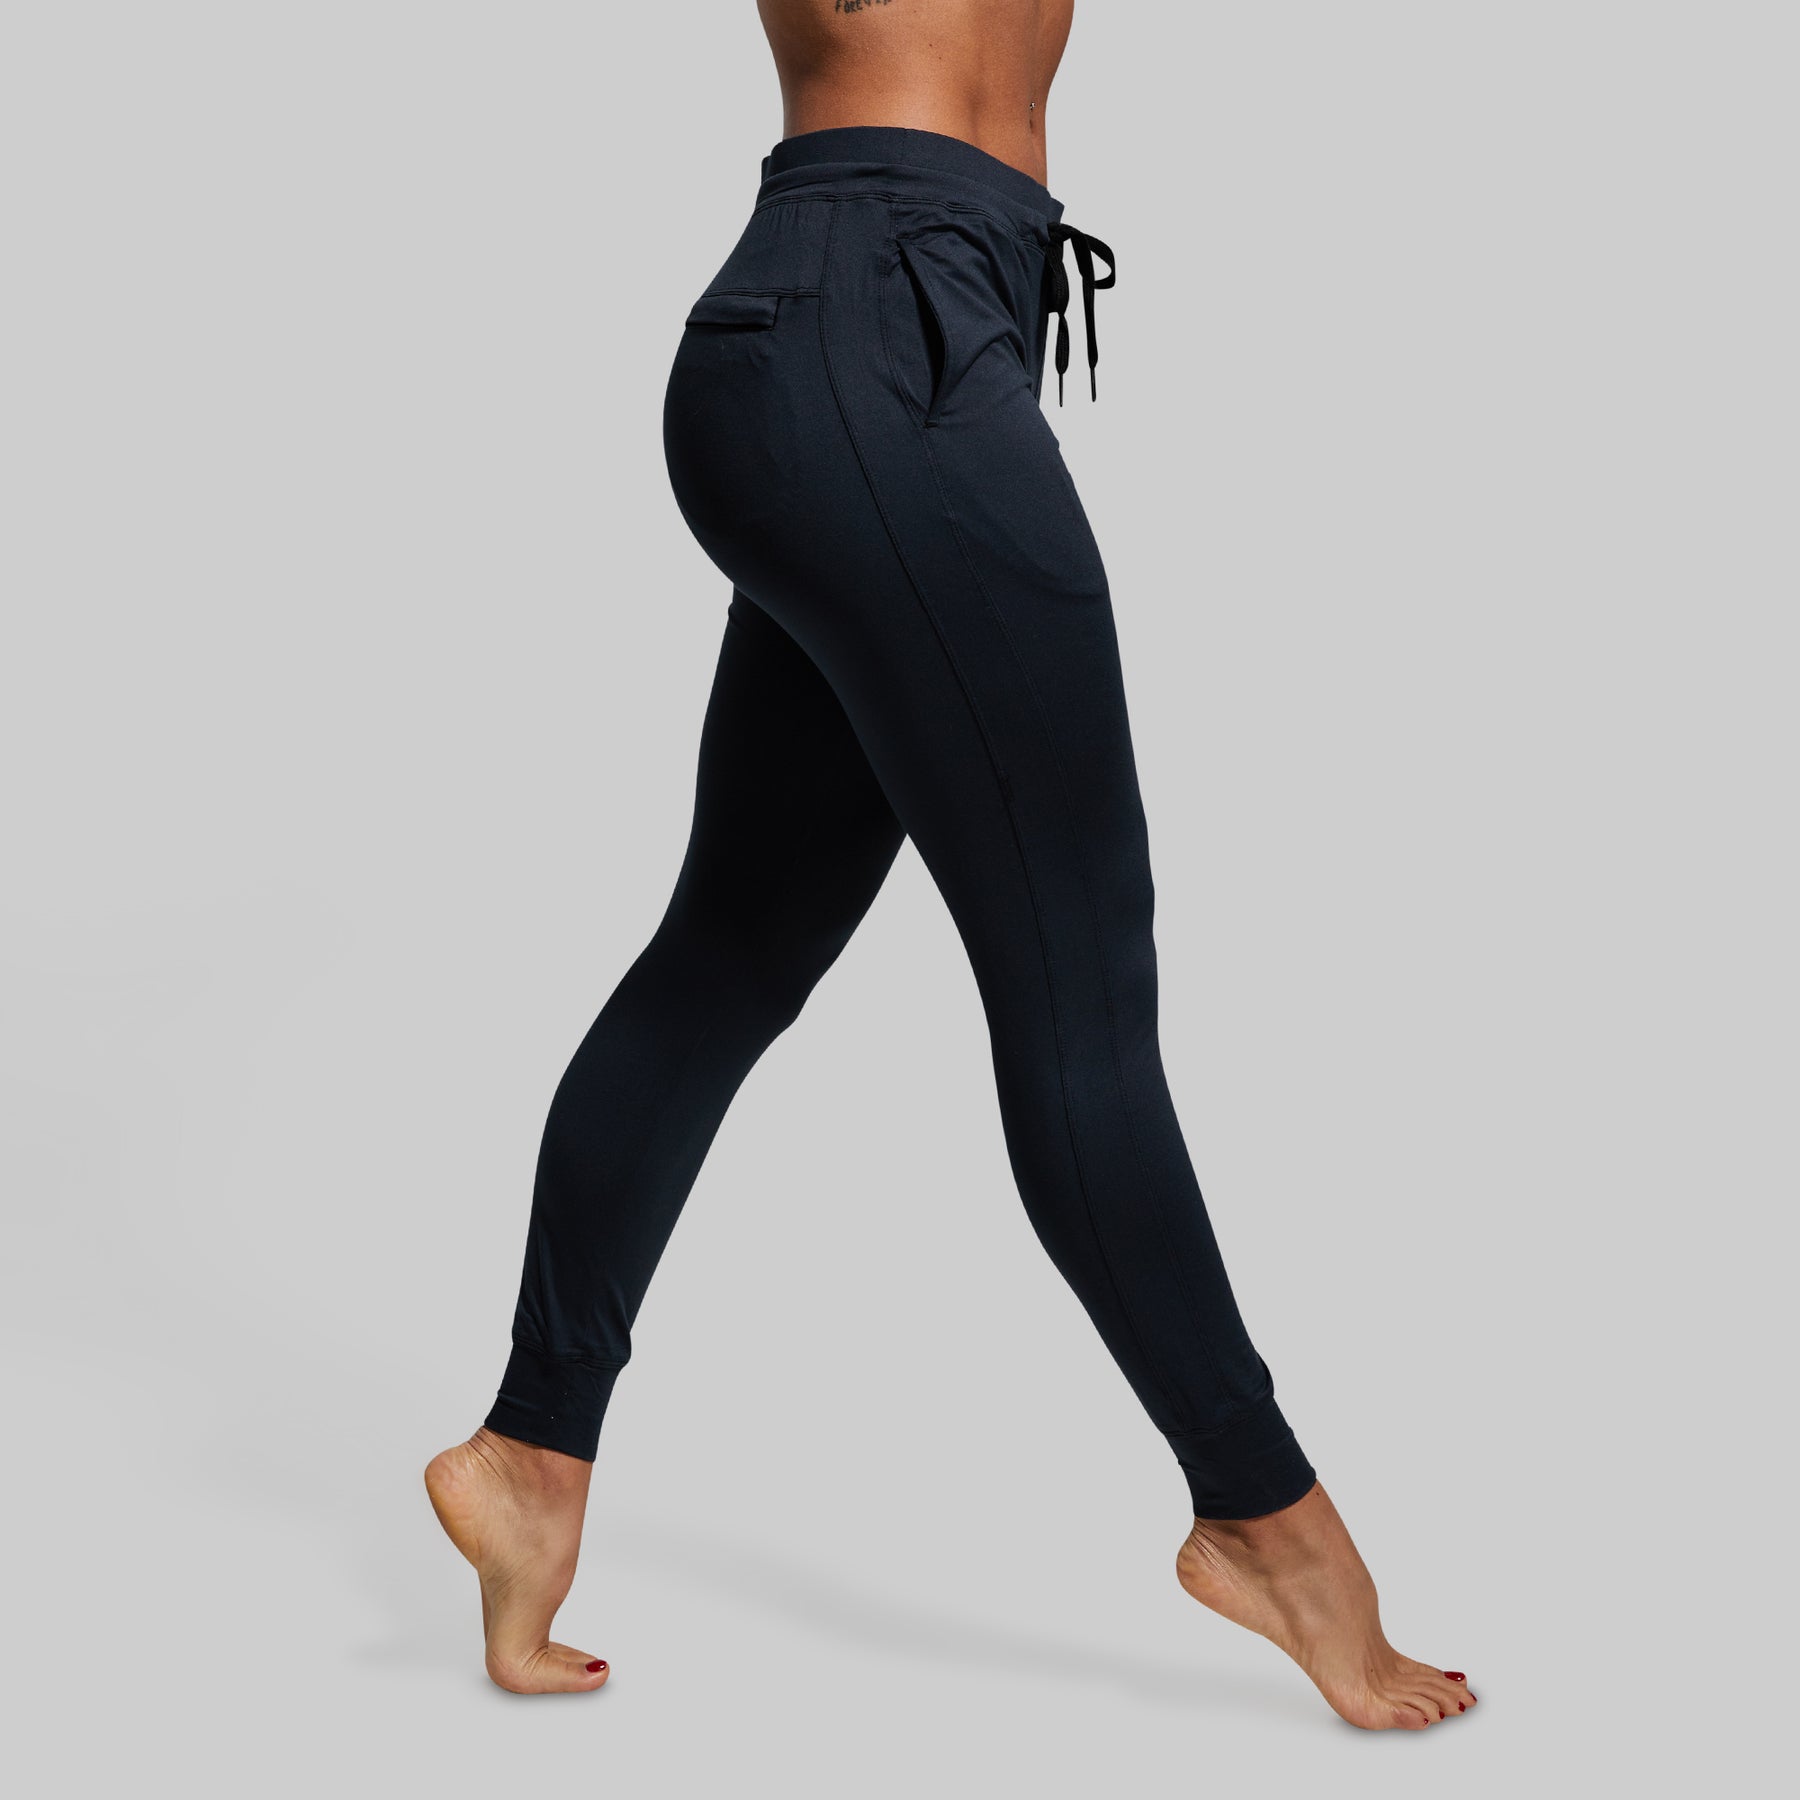 Women's Black Sweatpants  Joggers with Zip Pockets – Born Primitive